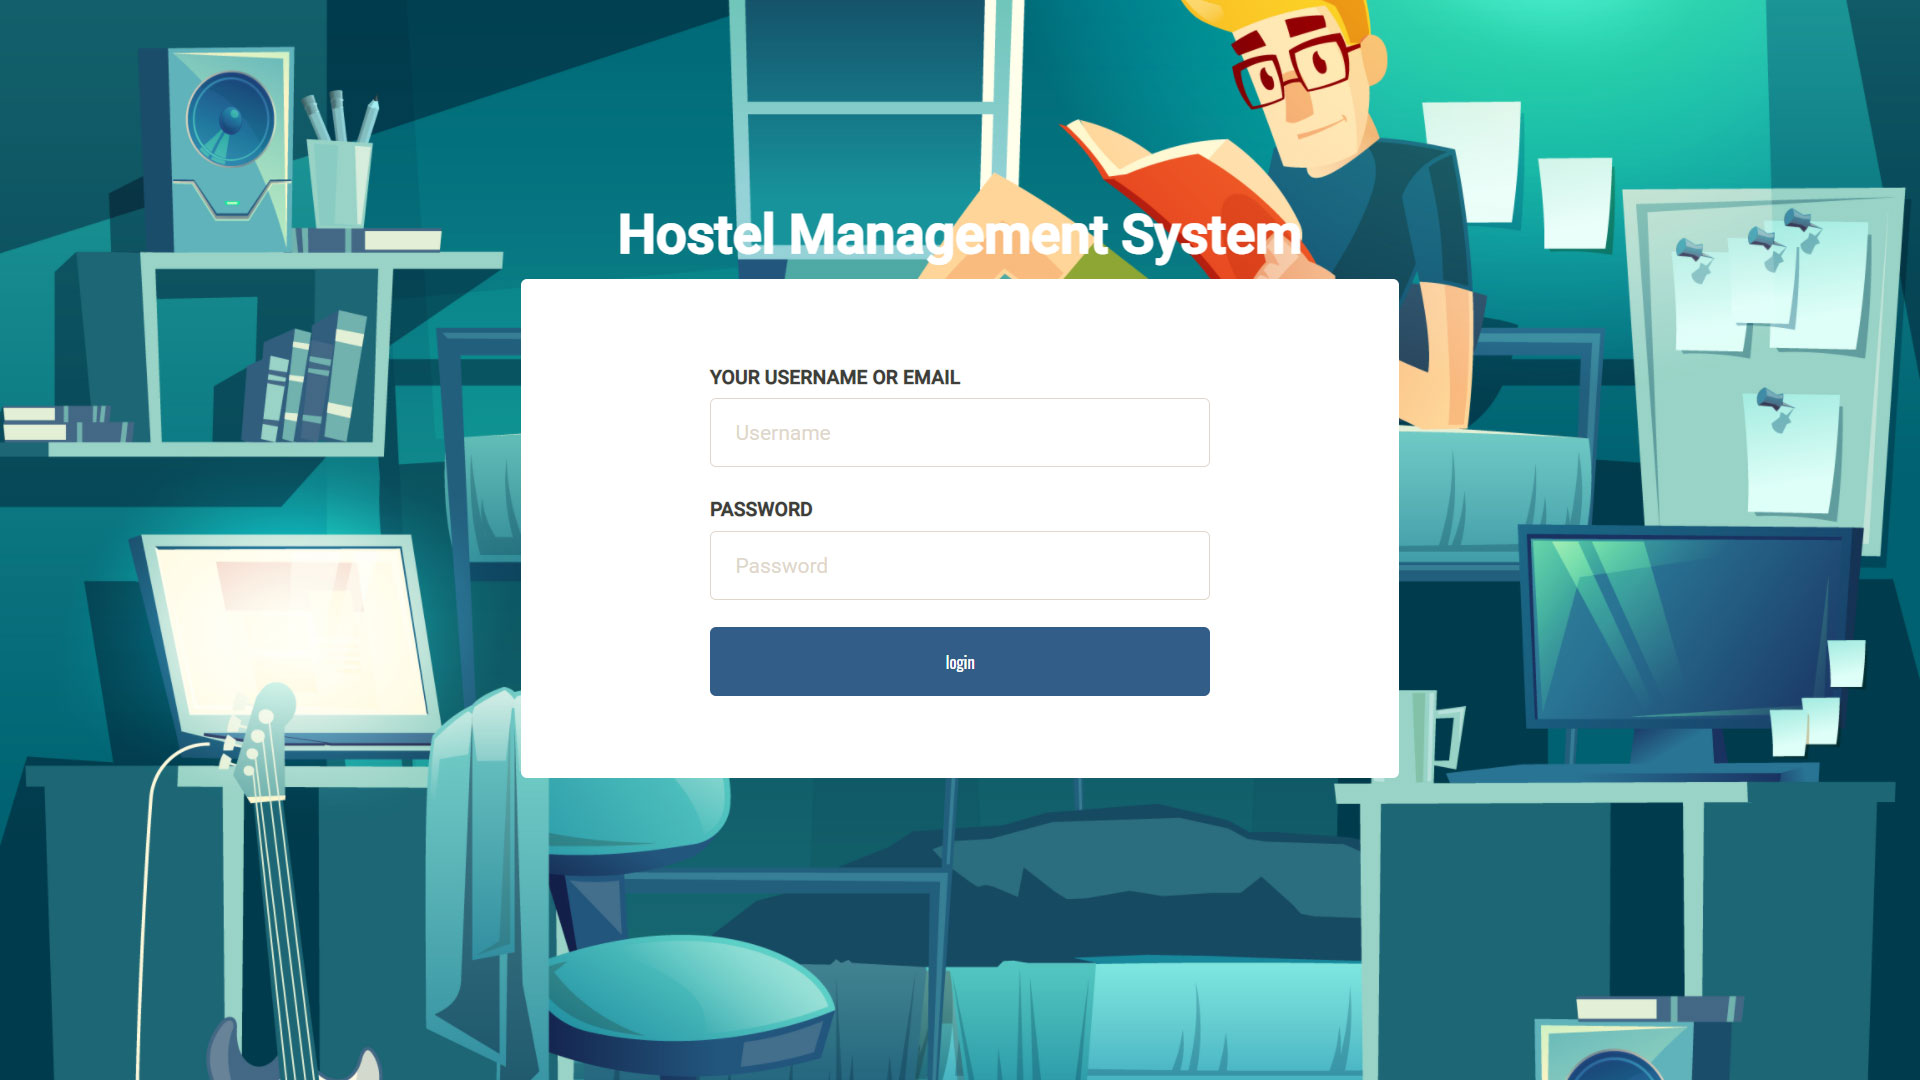 case study of hostel management system